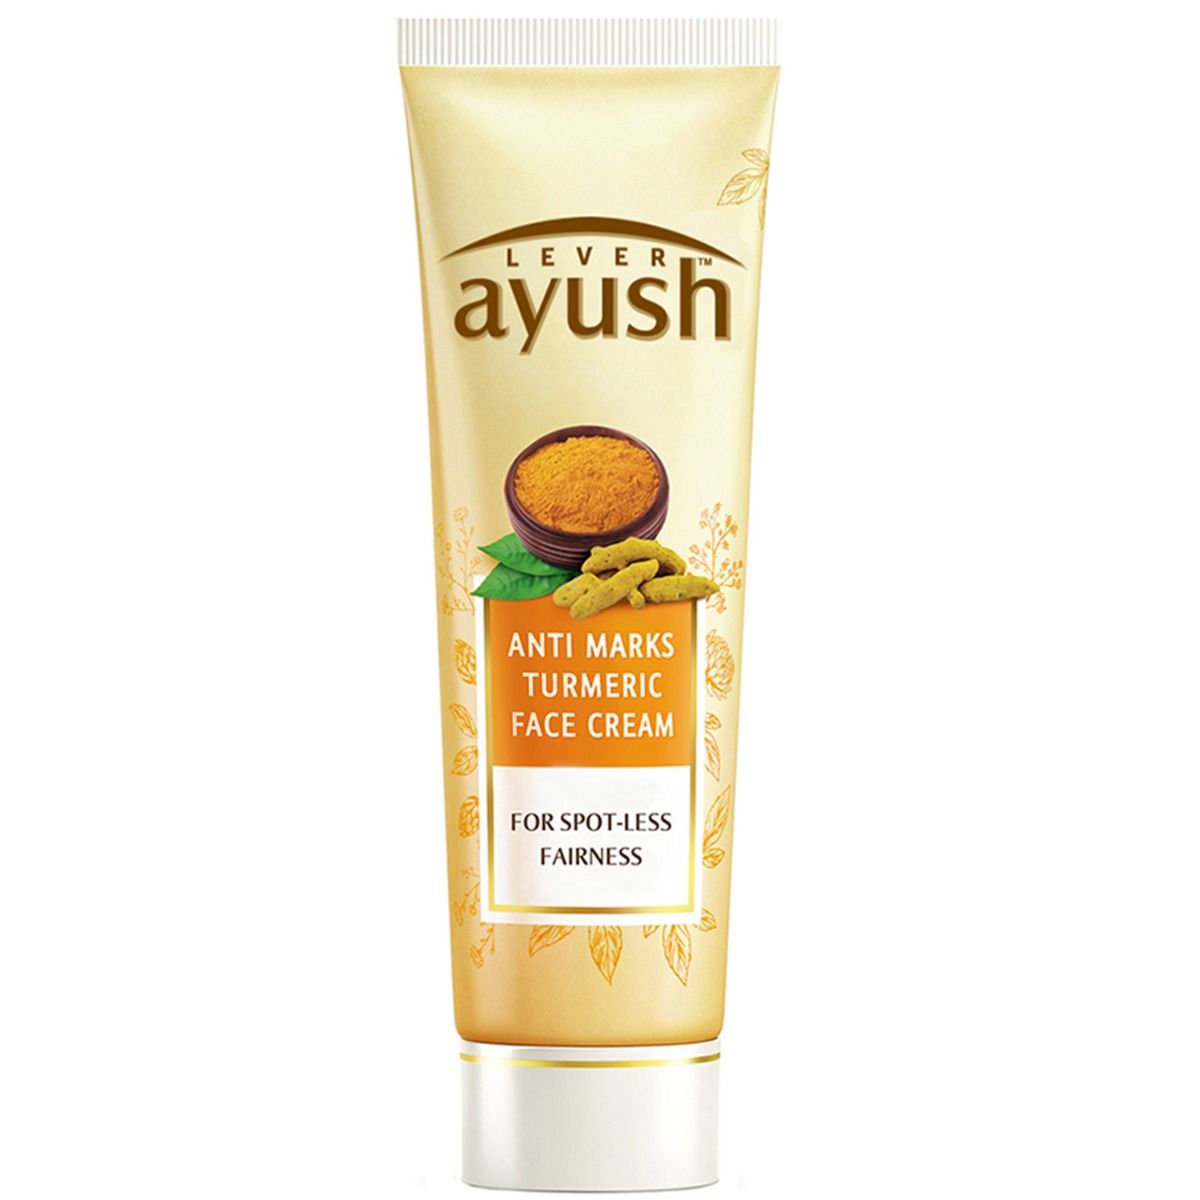 Buy Lever Ayush Anti Marks Turmeric Face Cream, 25 gm Online